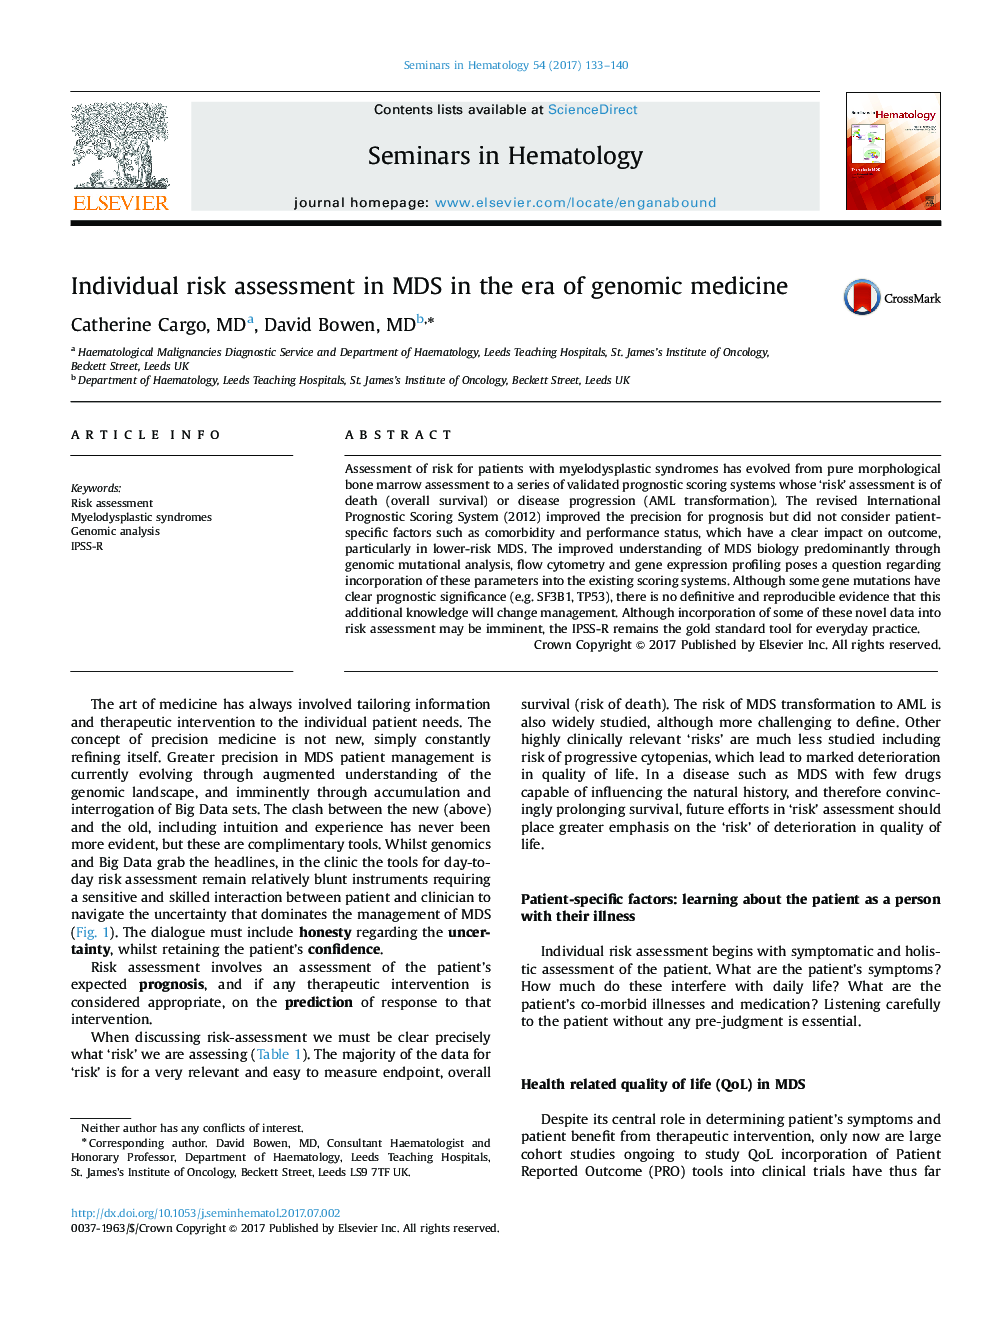 Individual risk assessment in MDS in the era of genomic medicine